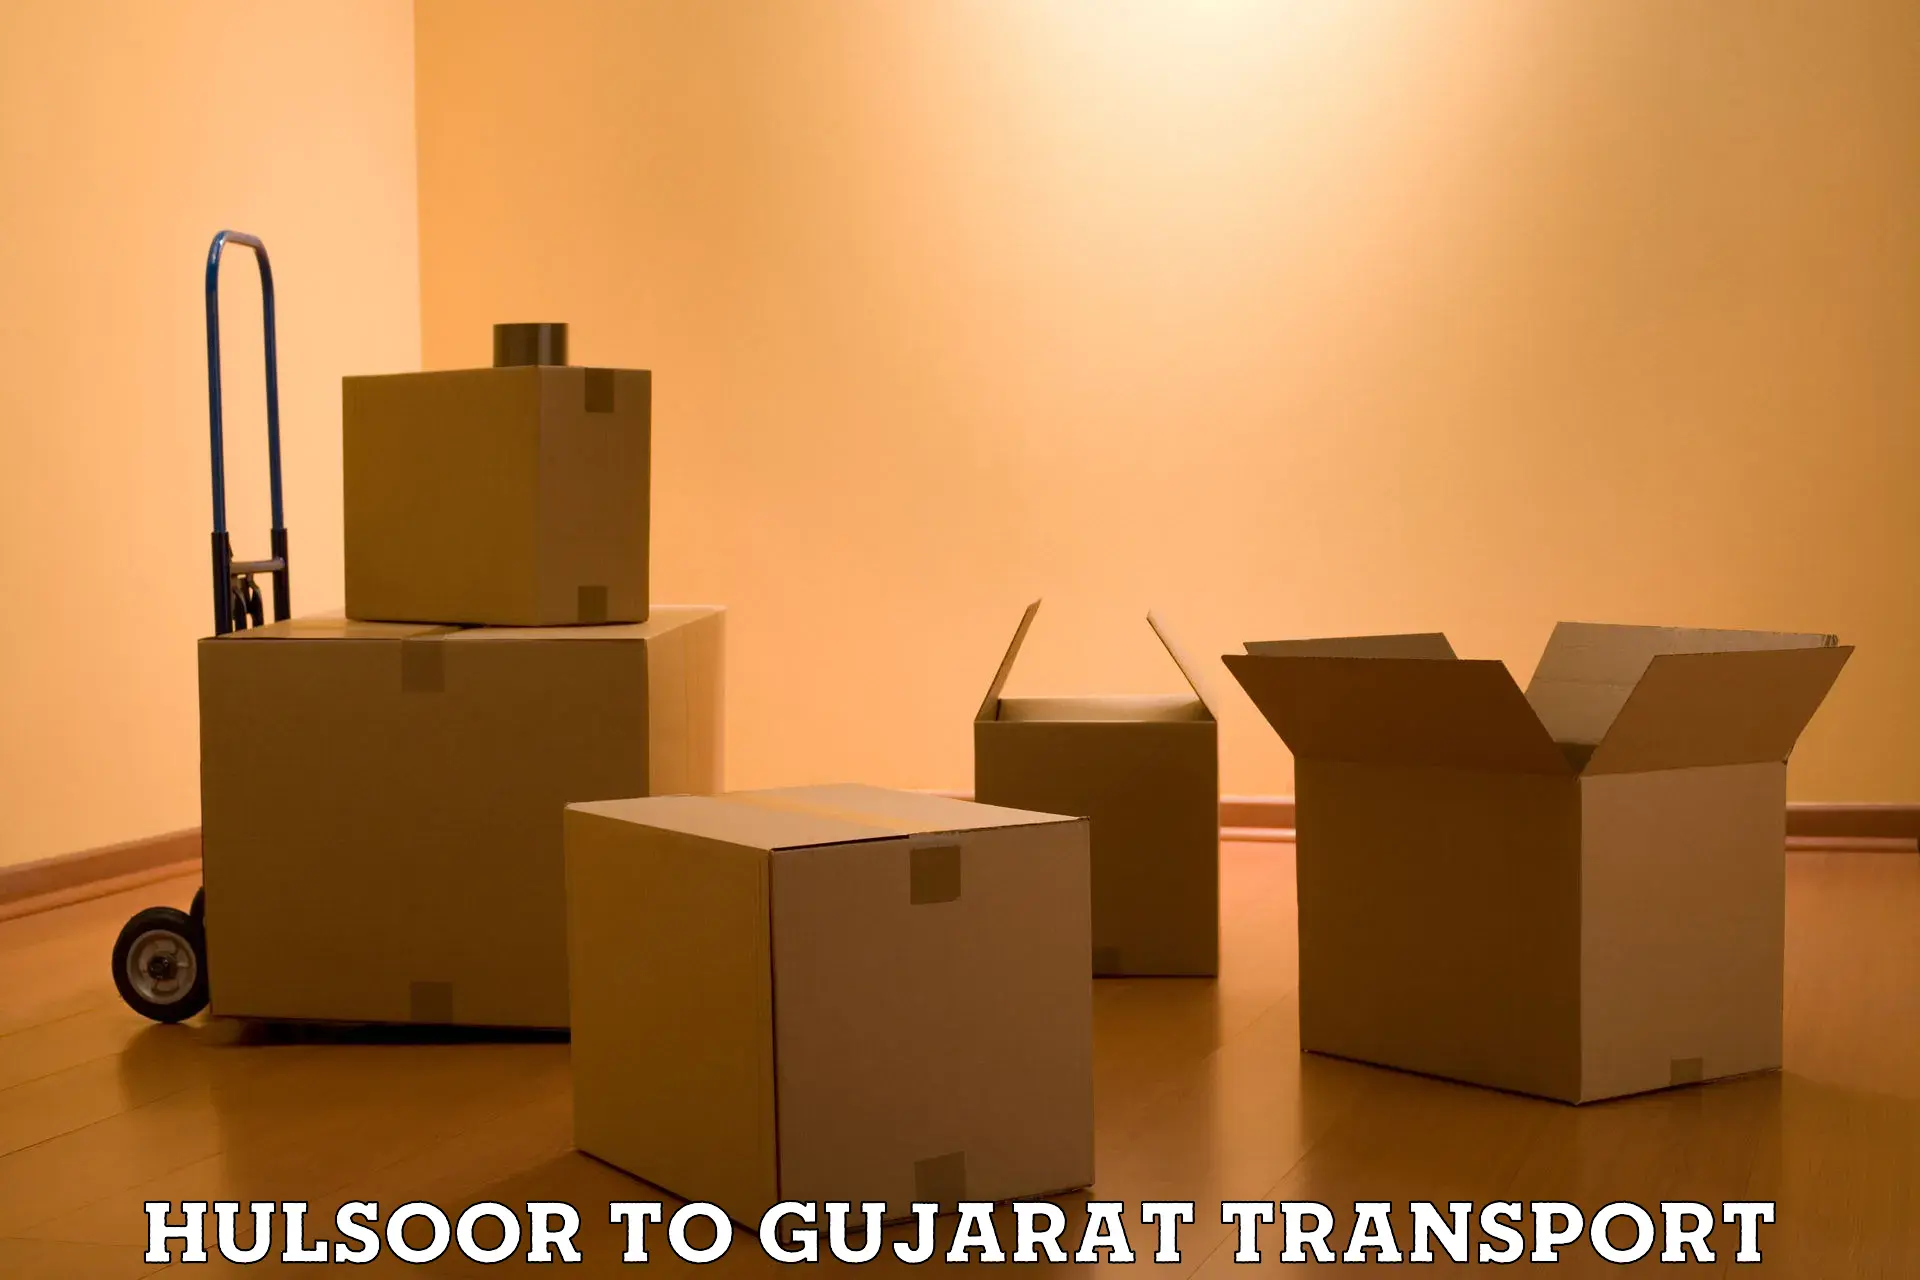 Furniture transport service Hulsoor to Gujarat